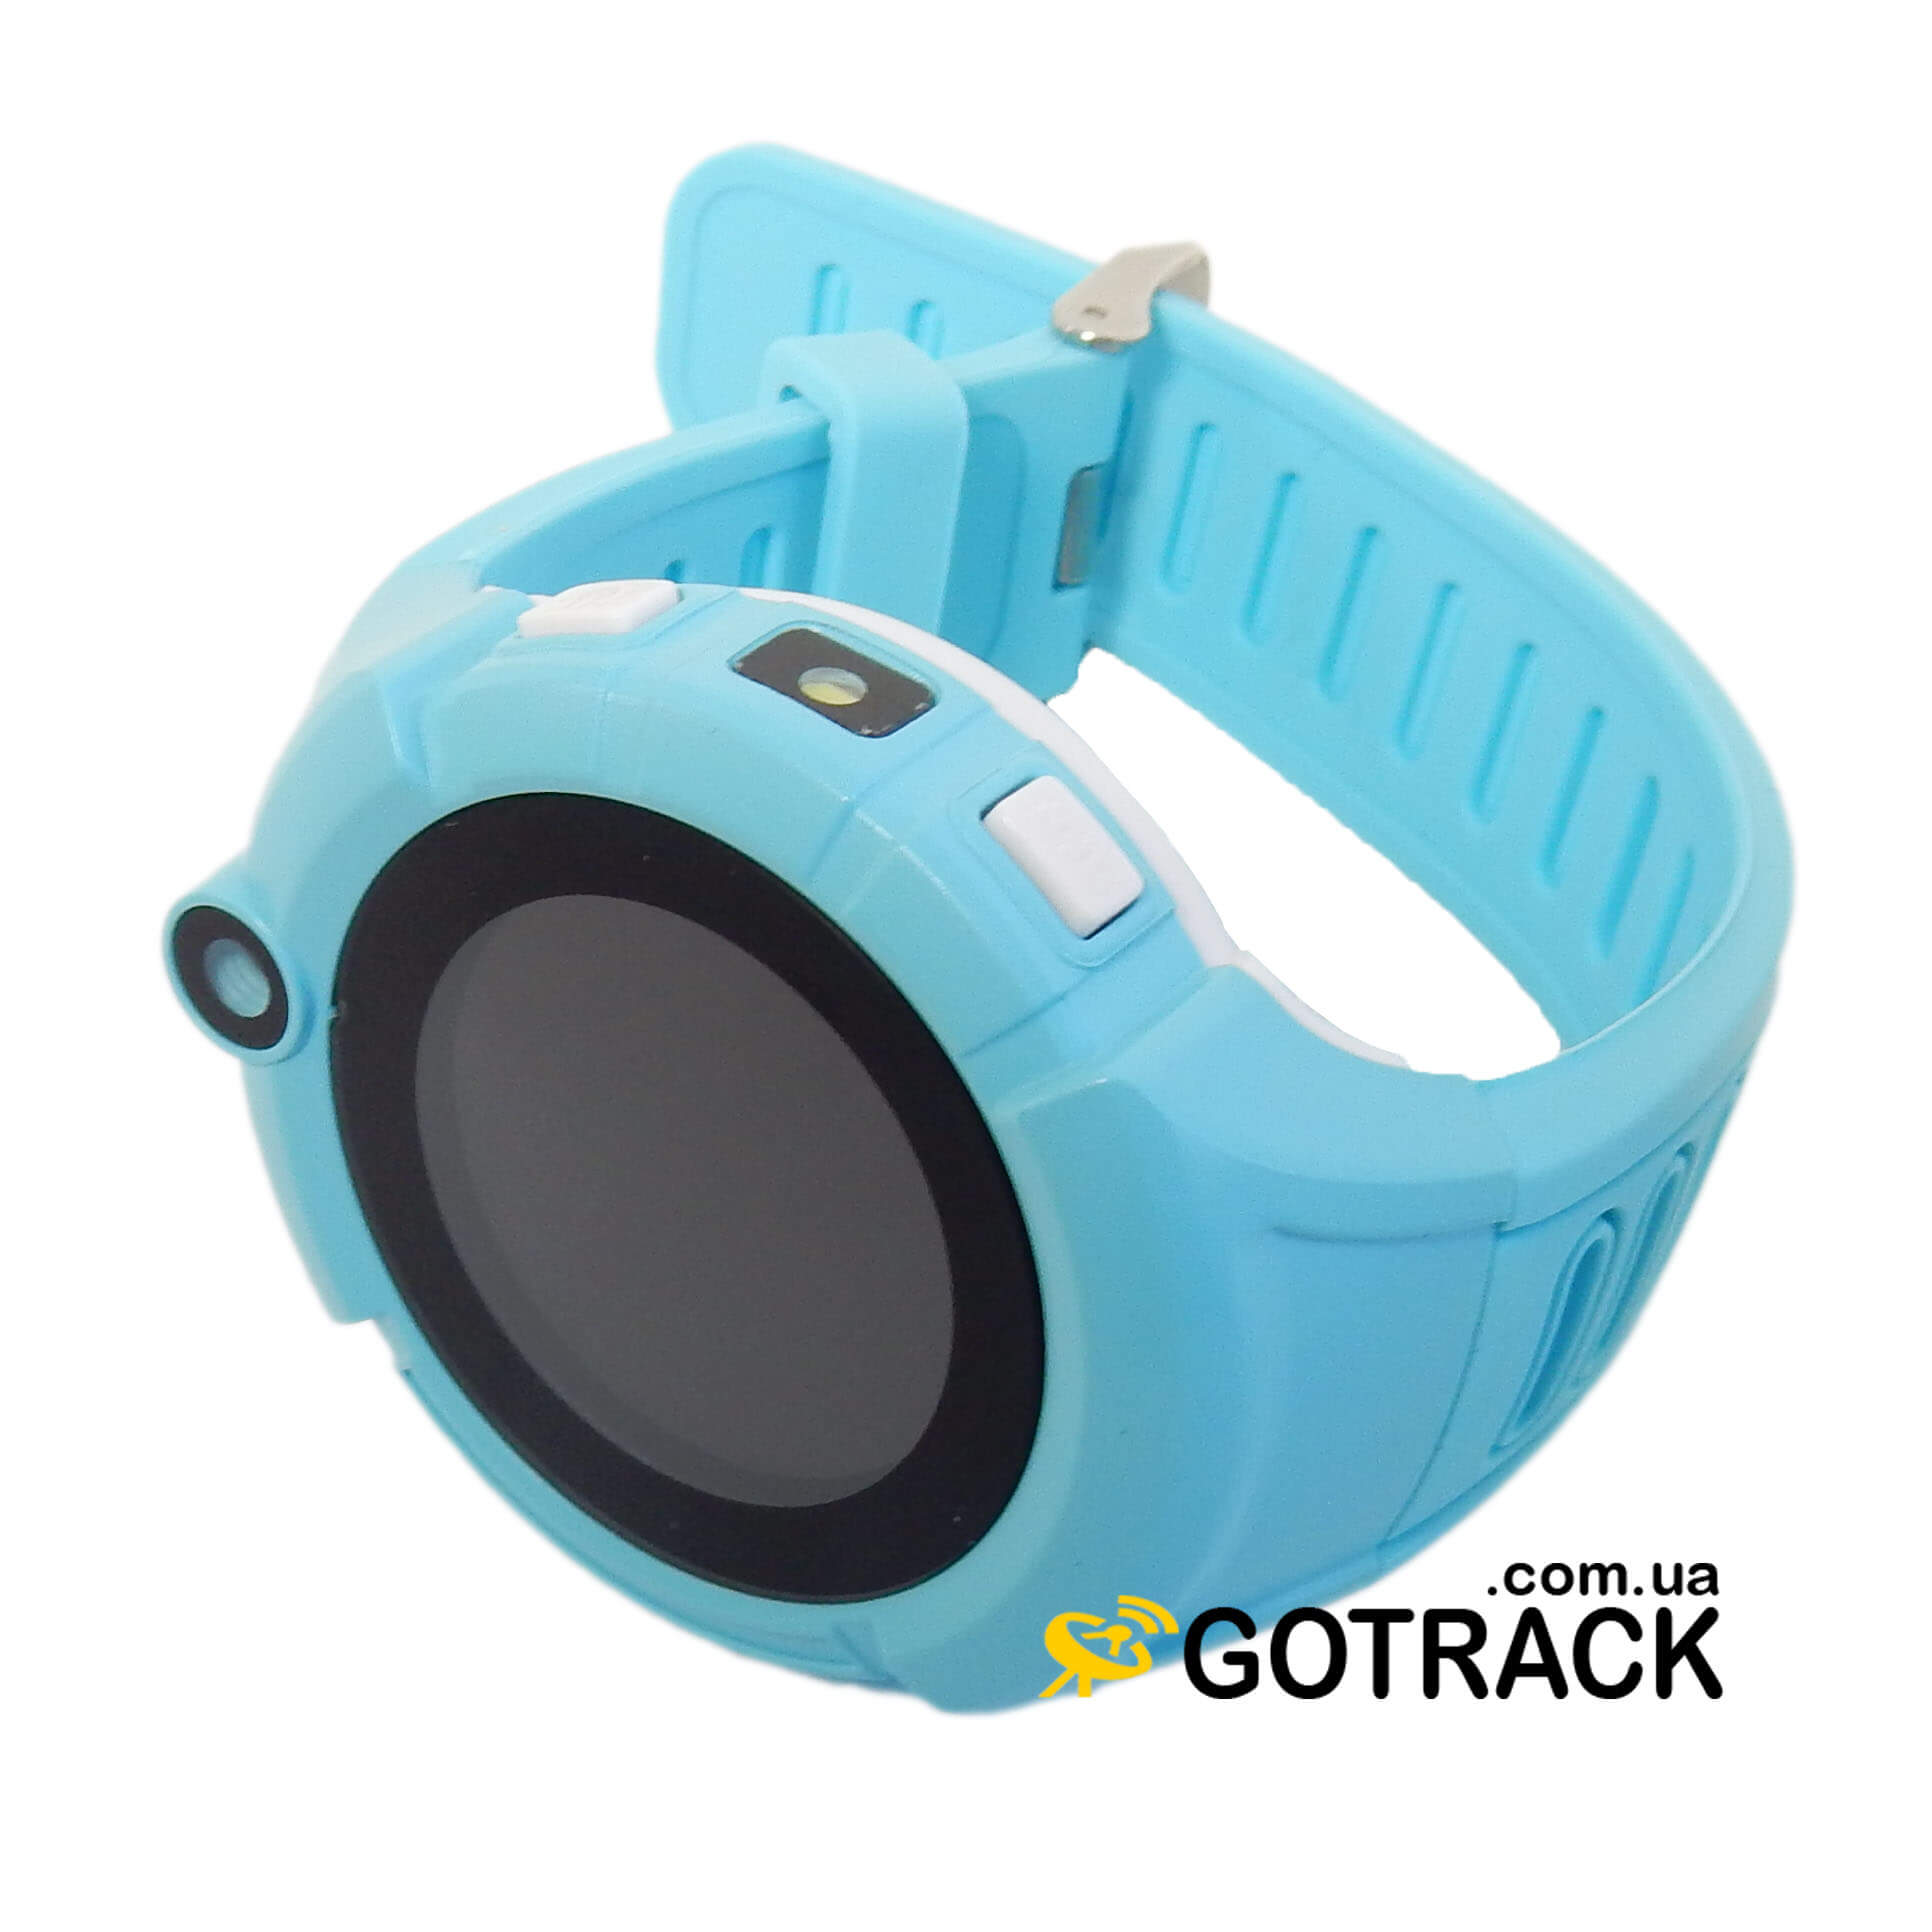 Детские часы Smart Watch WONLEX GW600